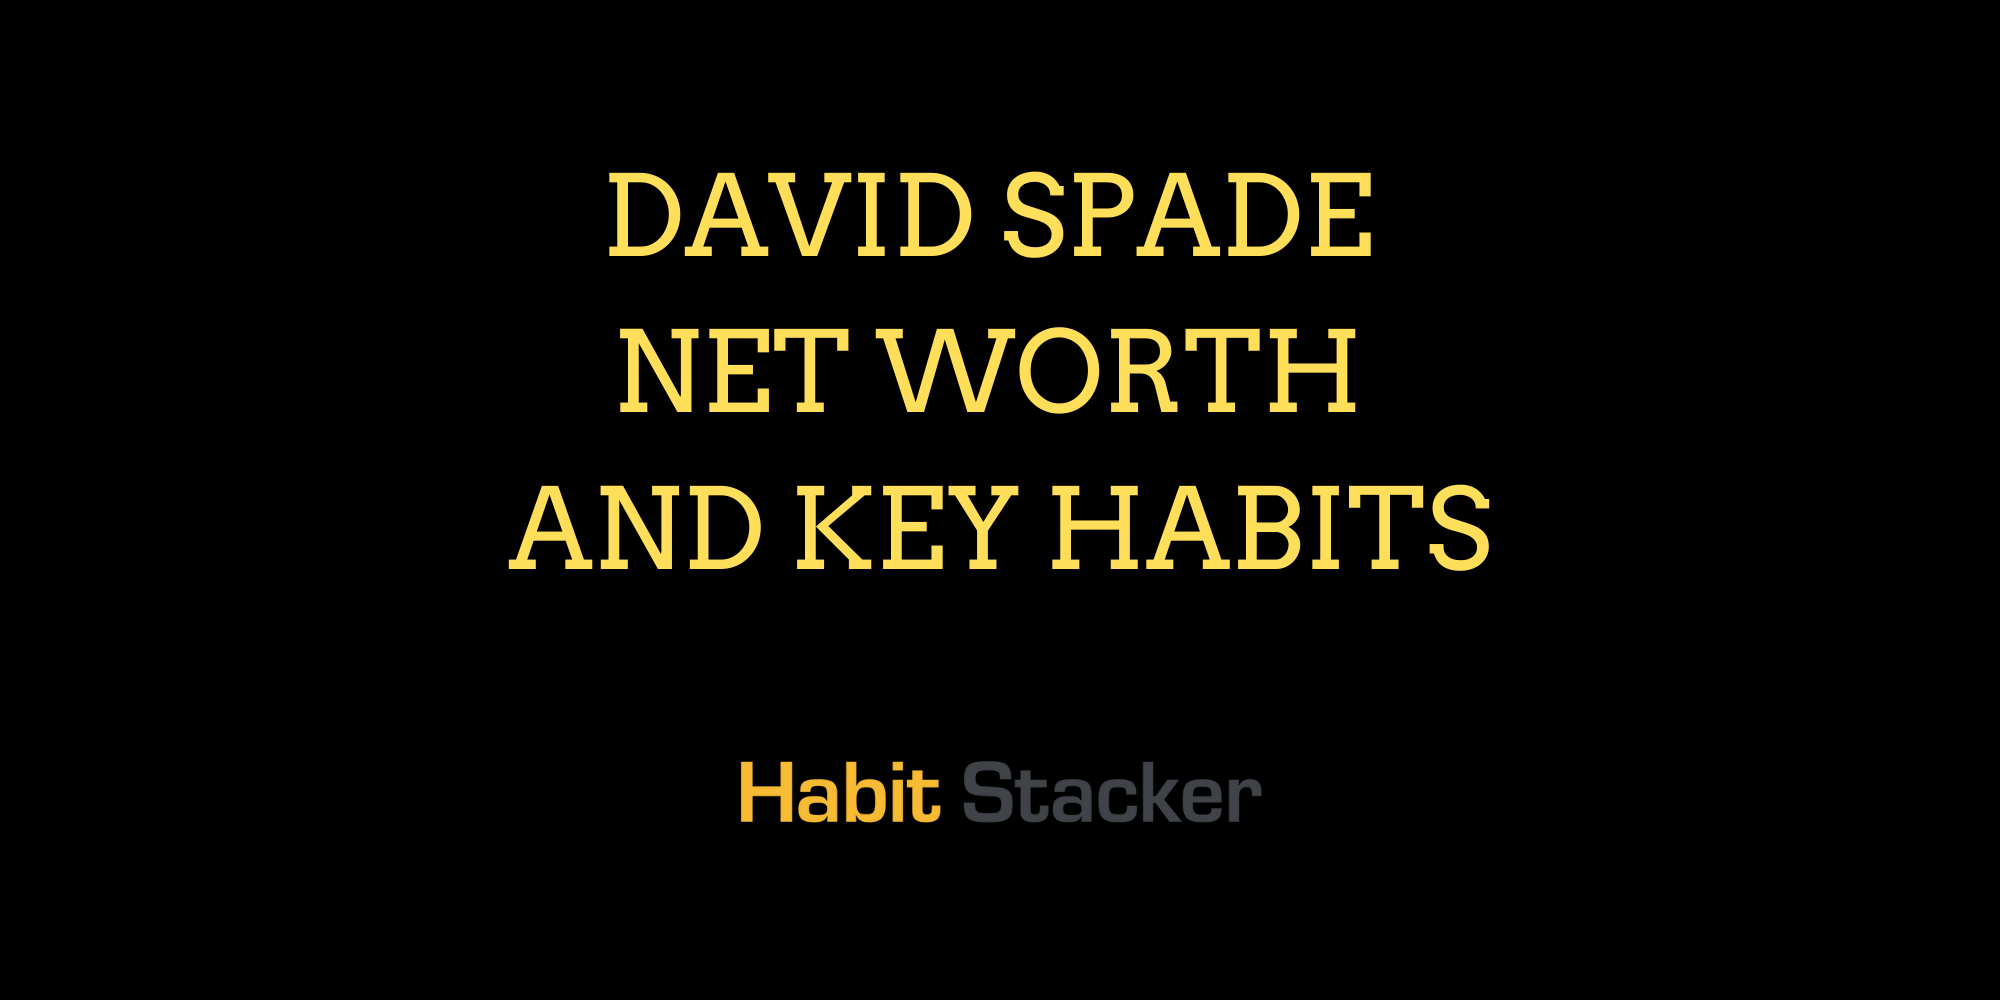 David Spade Net Worth and Key Habits